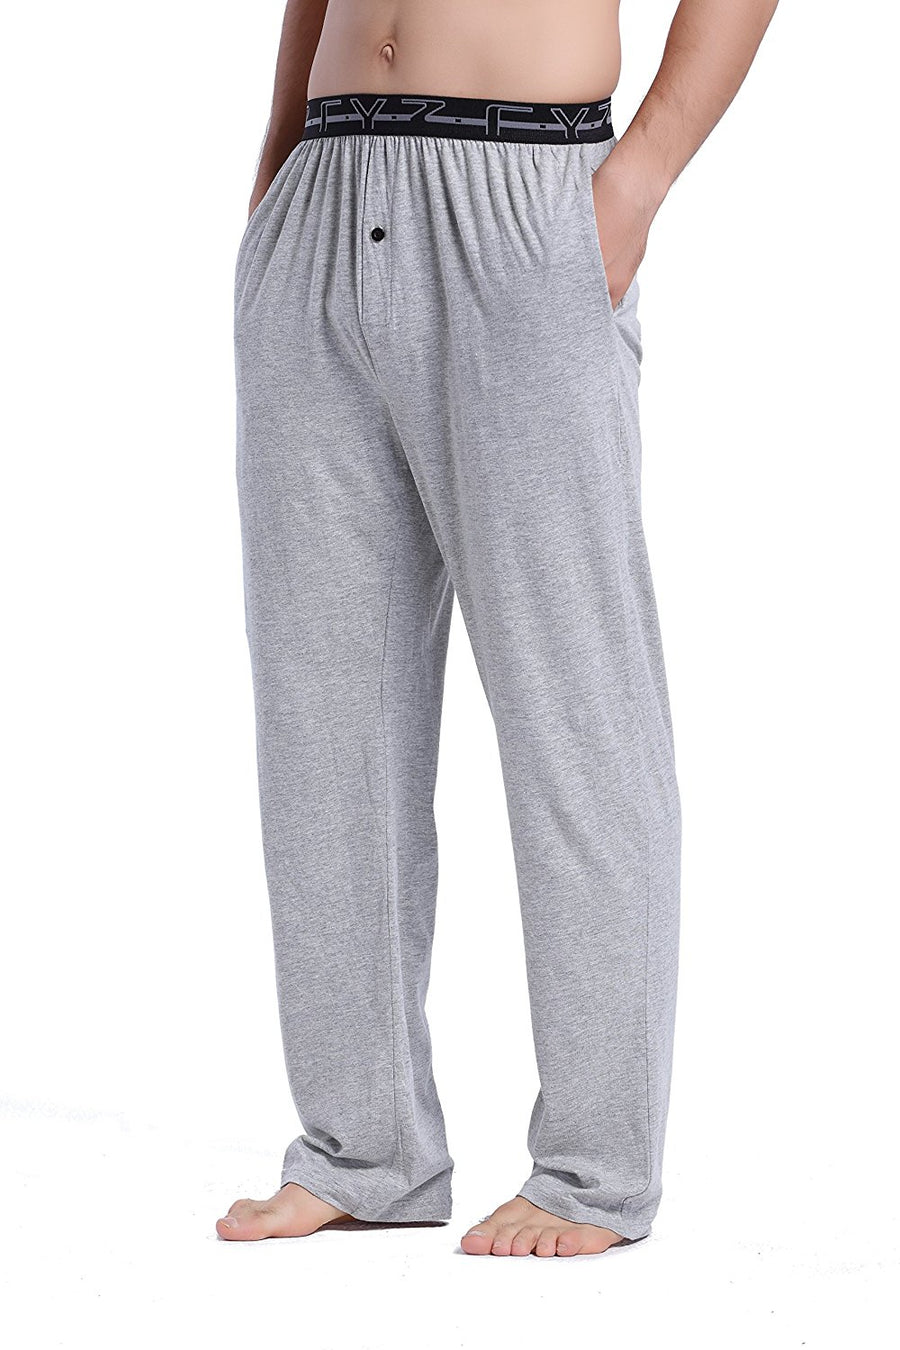 CYZ Women's 100% Cotton Woven Sleep Pajama Pants